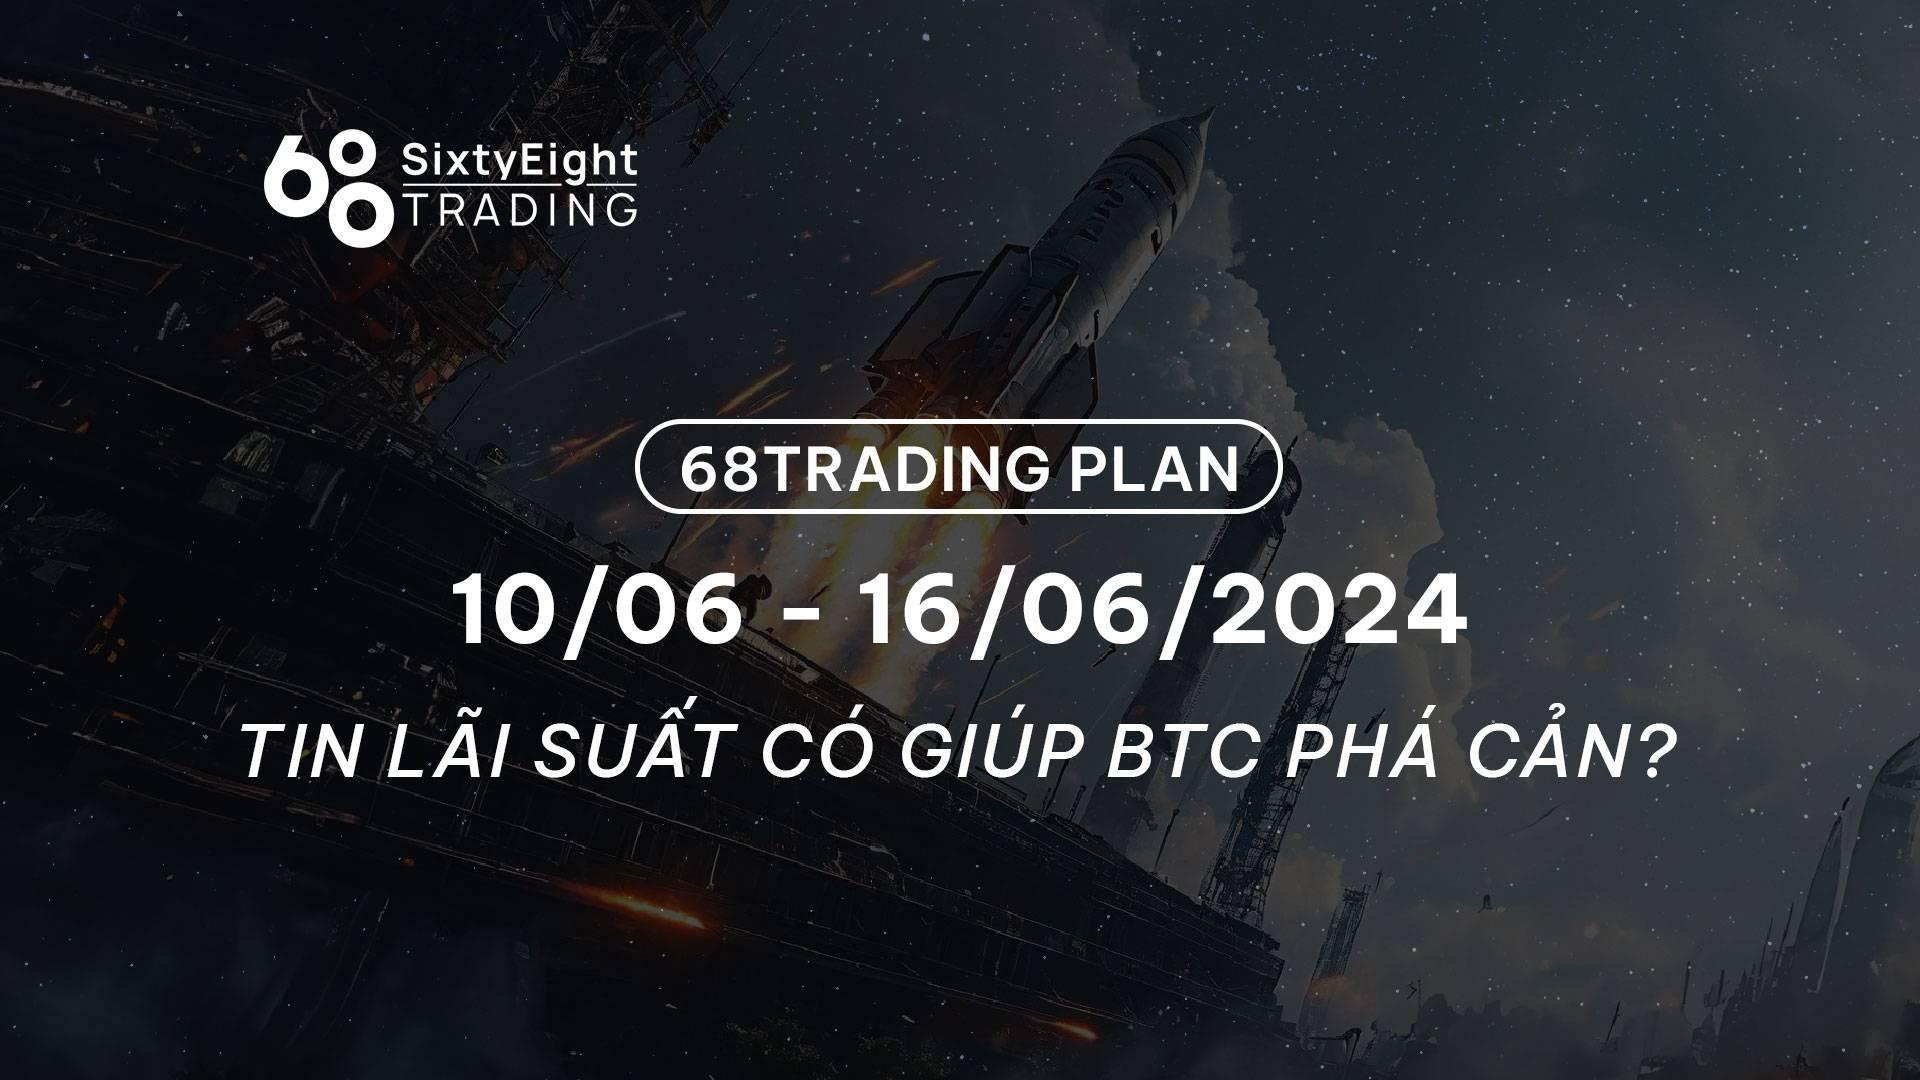 68-trading-plan-1006-16062024-tin-lai-suat-co-giup-btc-pha-can